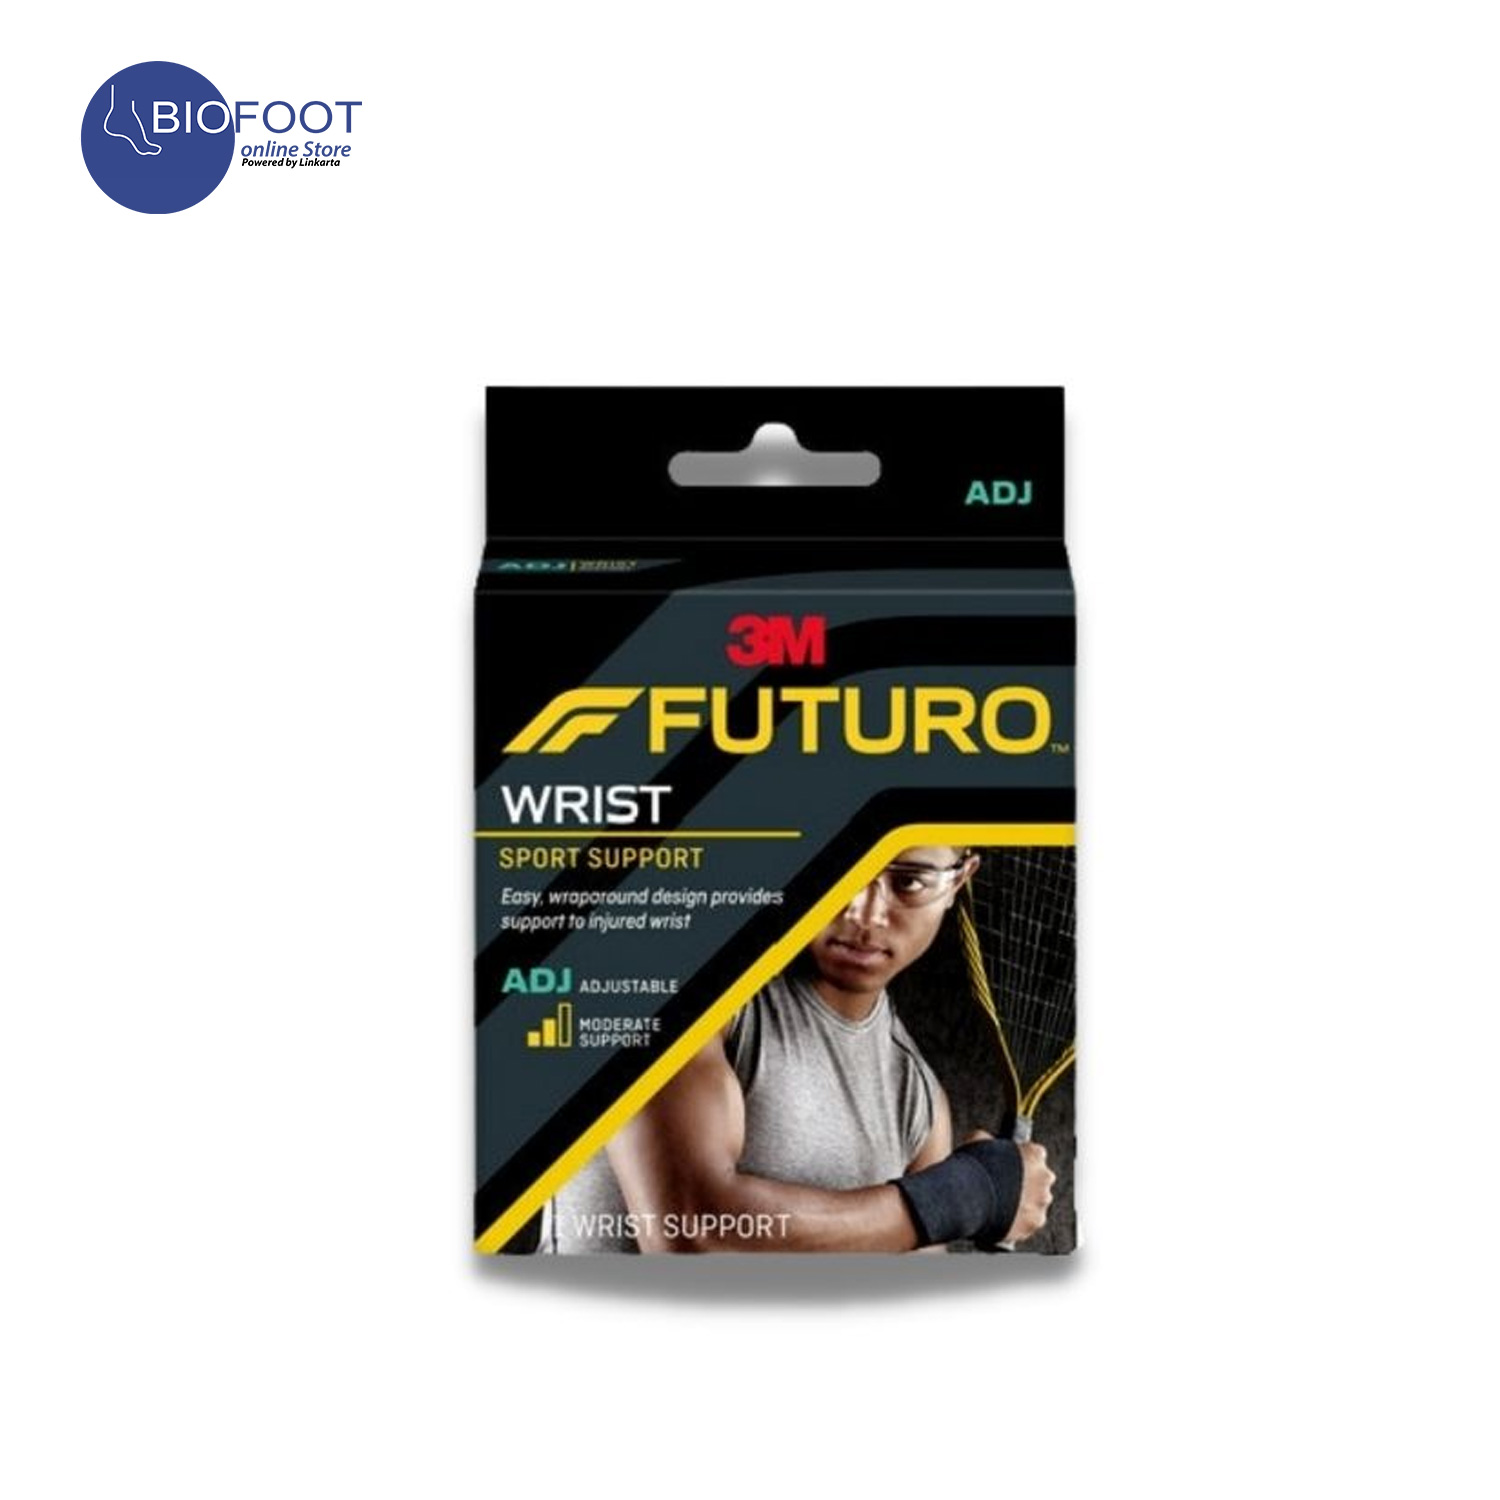 Futuro Sport Wrist Support-Adj-09033 Online Shopping Dubai, UAE